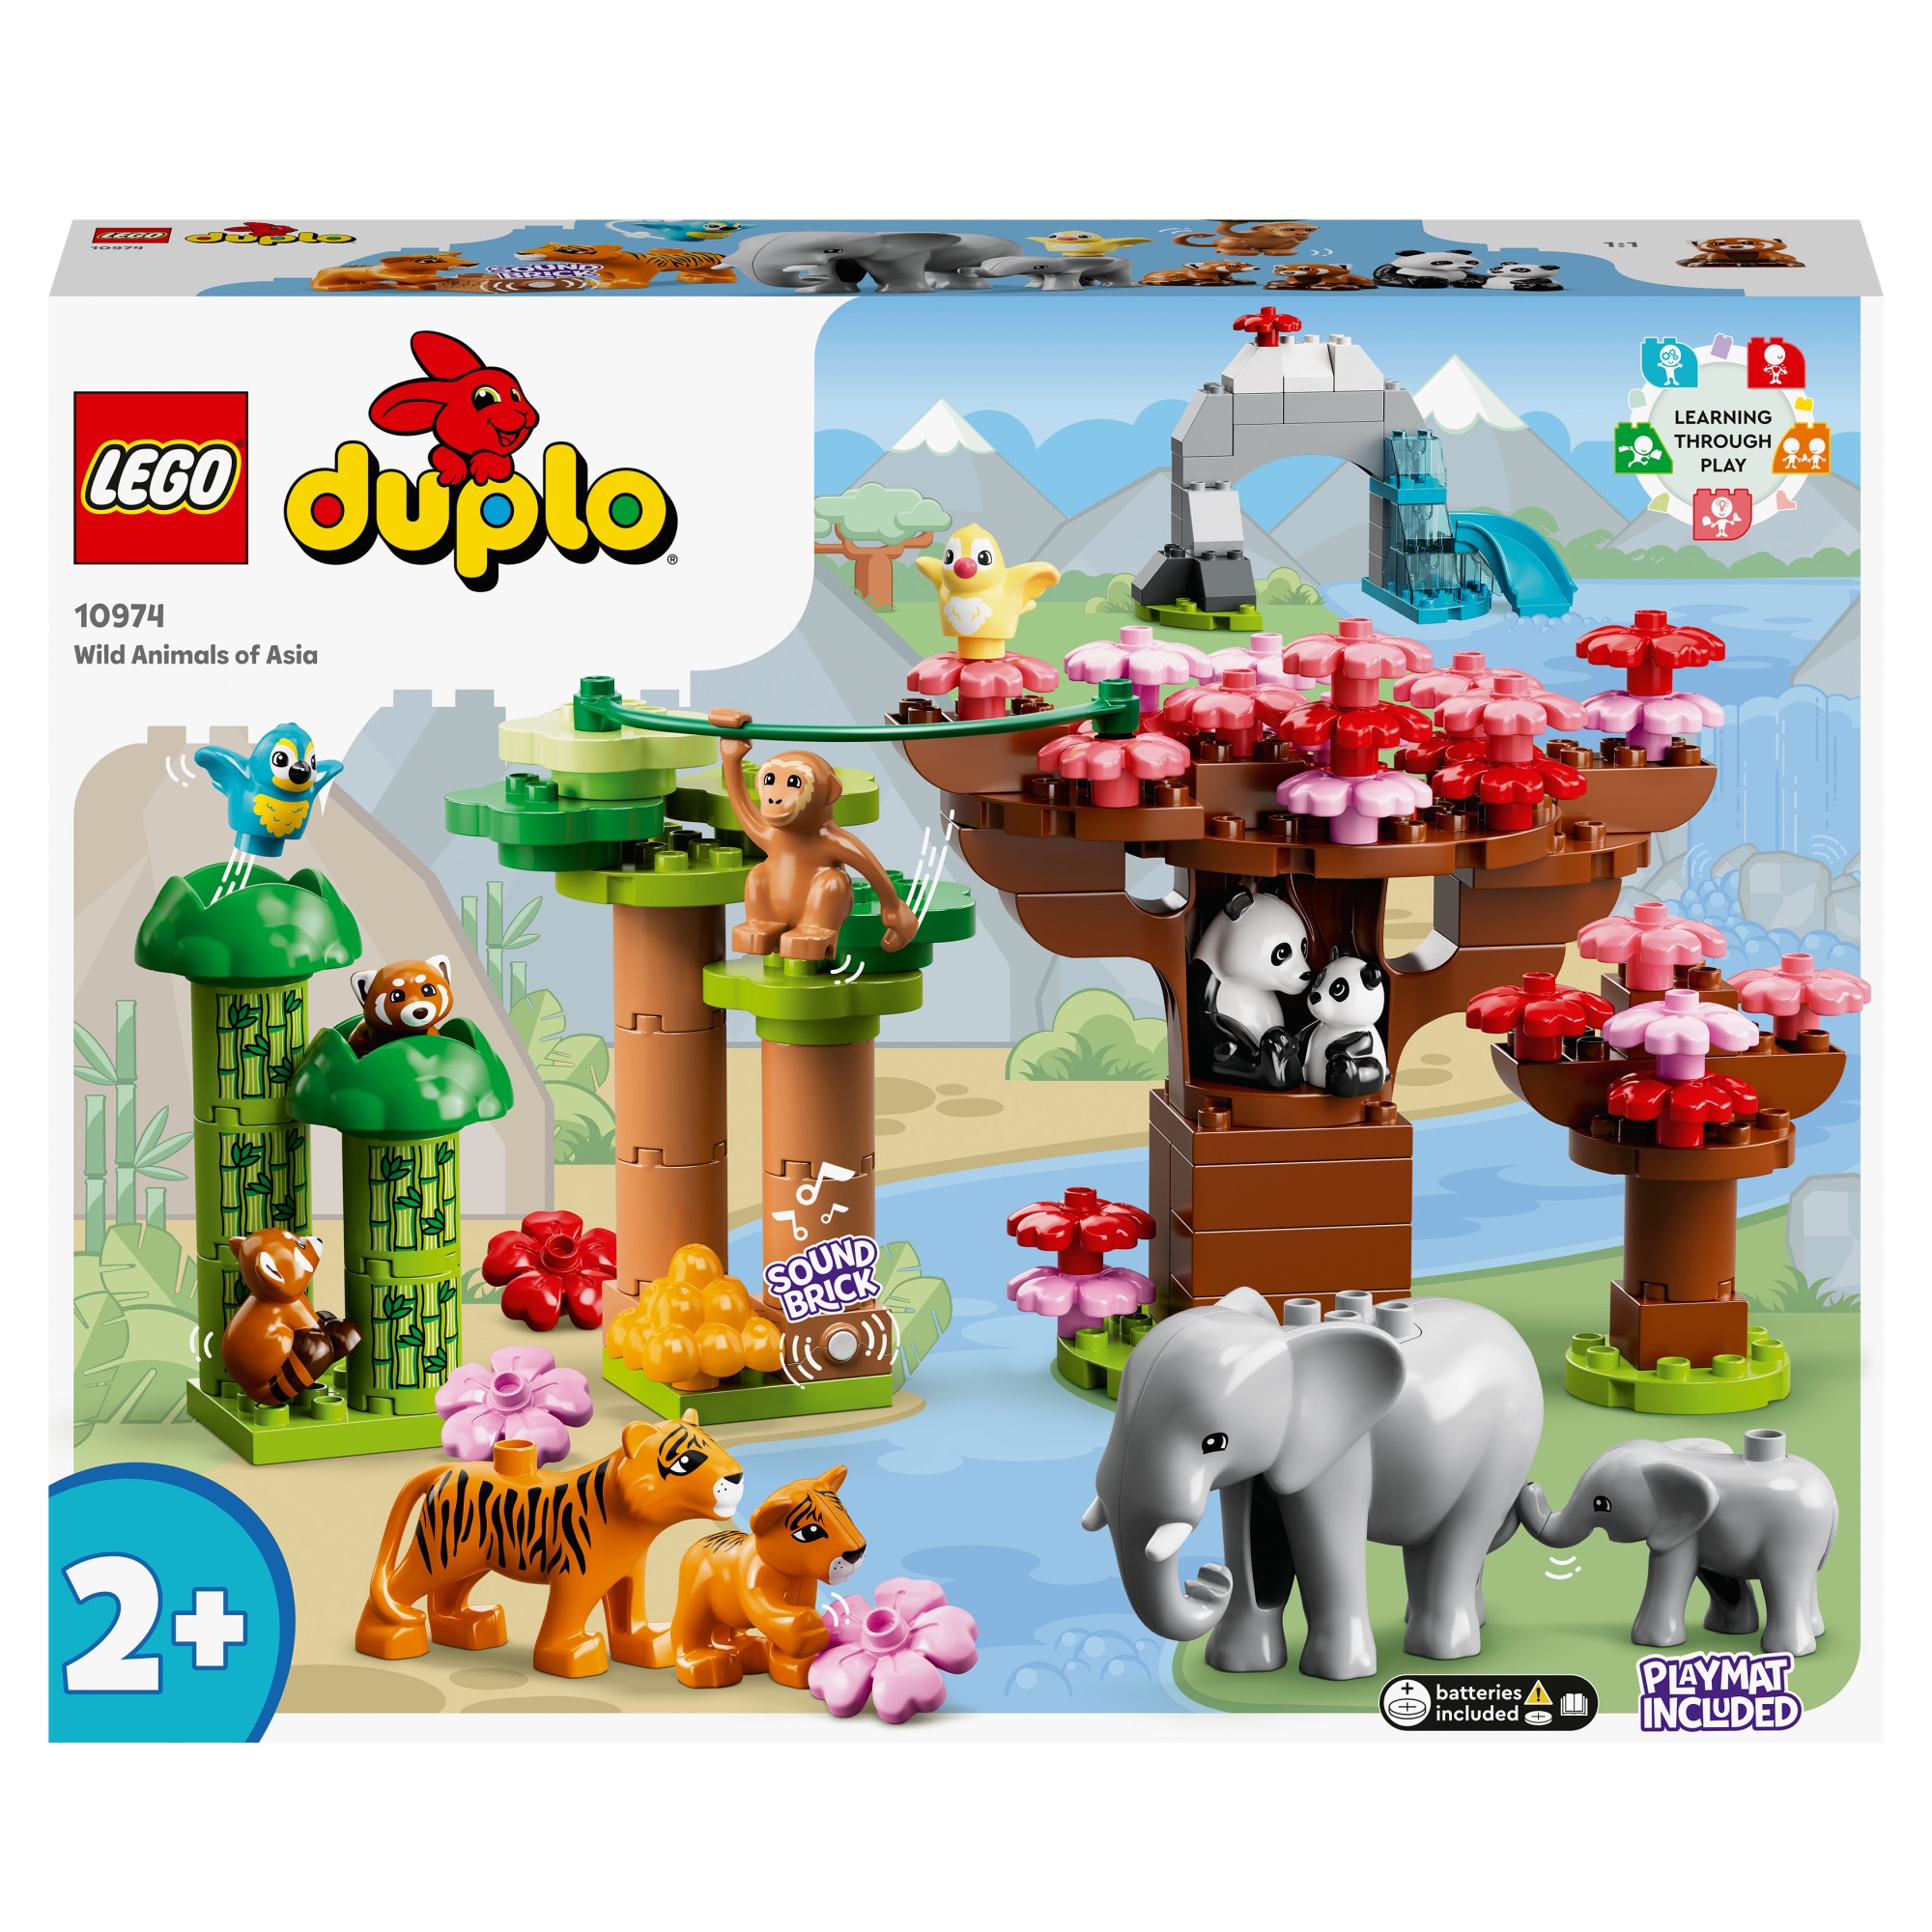 LEGO 10974 DUPLO Wild Animals of Asia Animal Set at Toys R Us UK